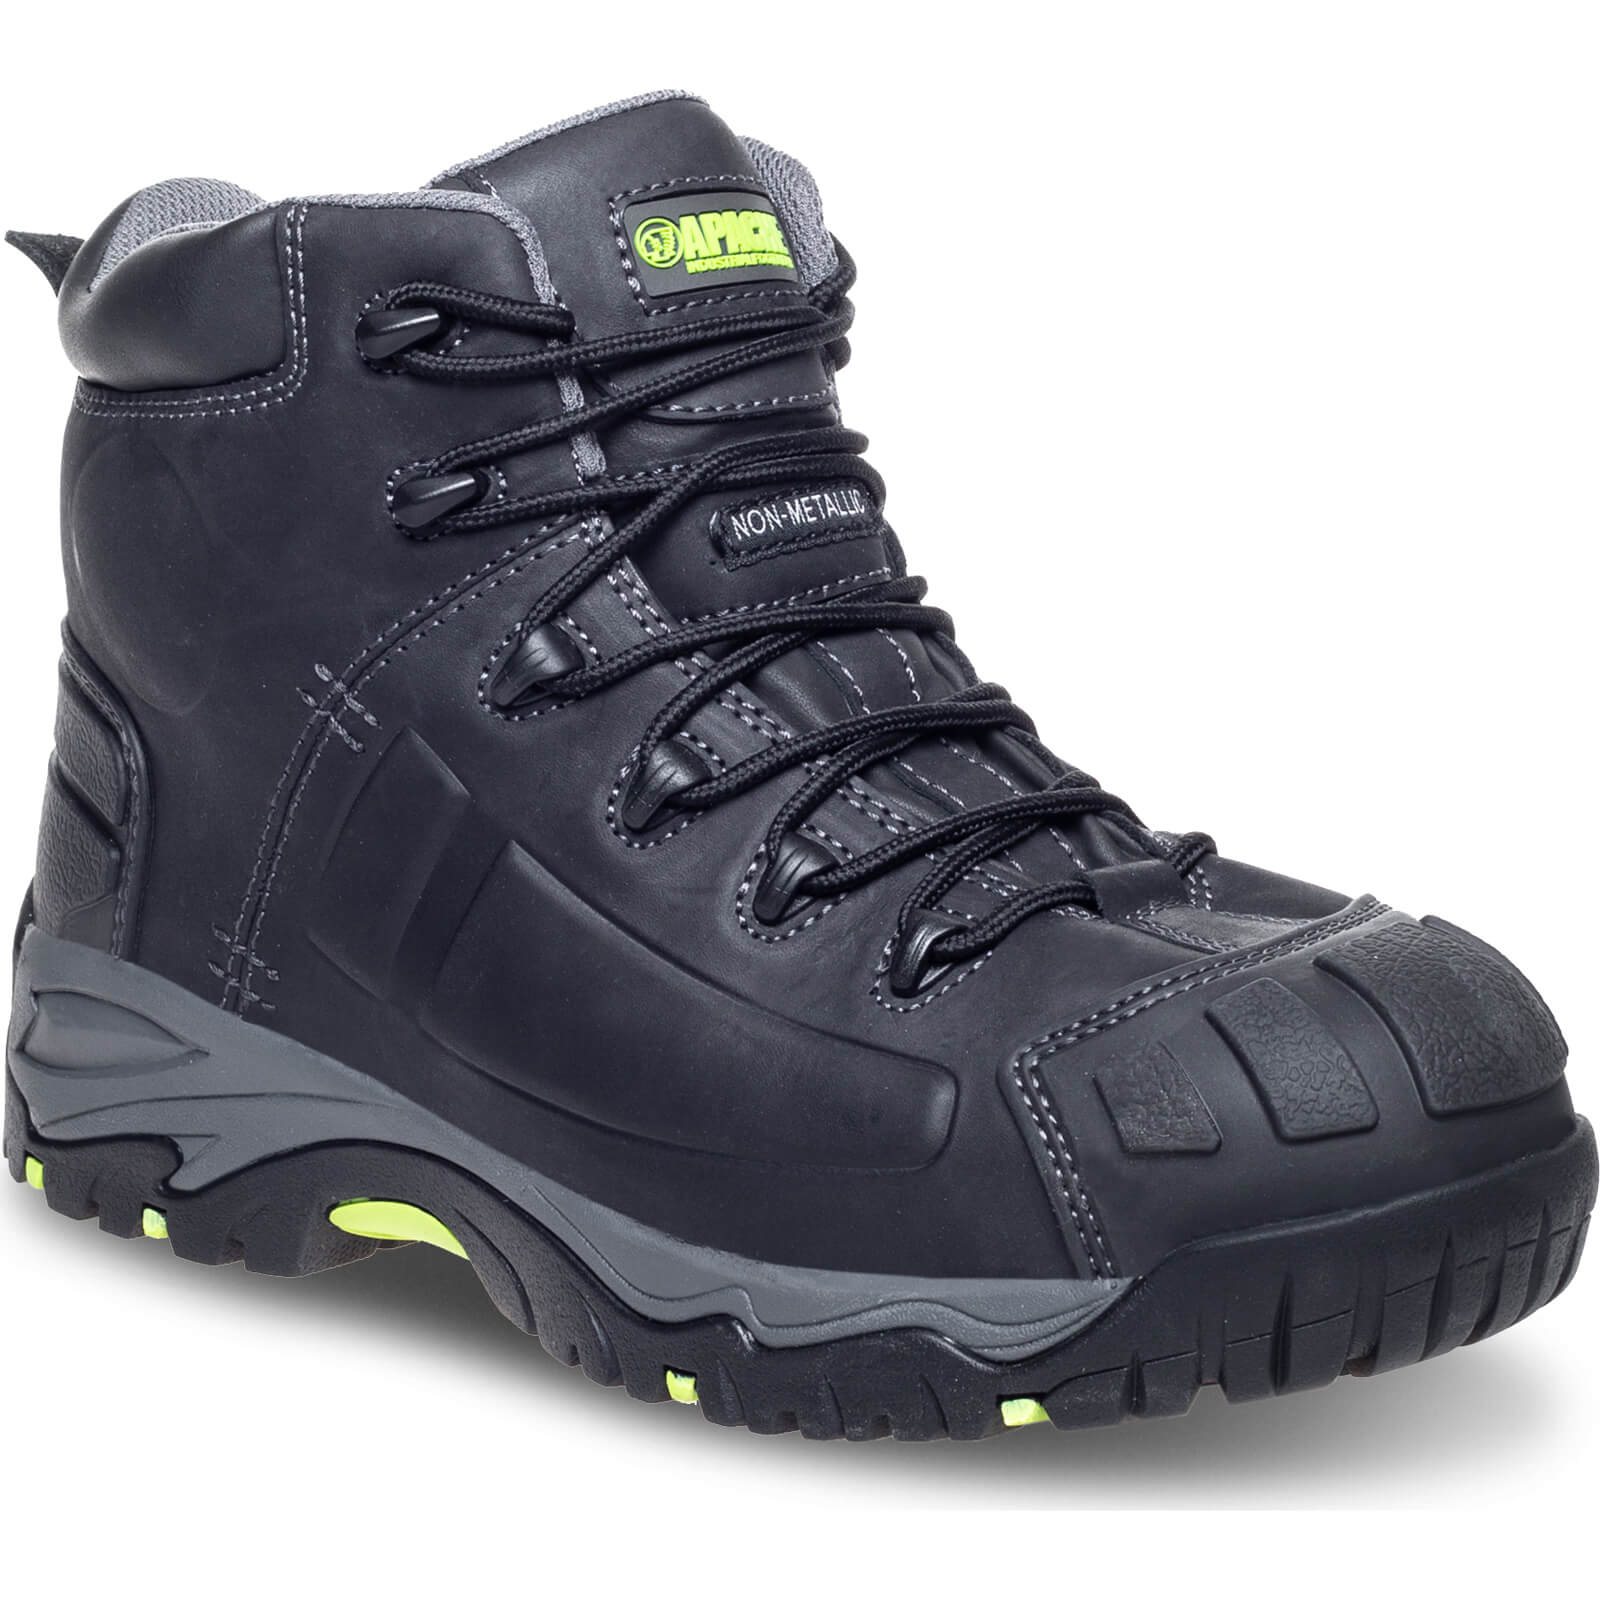 Apache Mercury Non Metallic Waterproof Safety Boots Black Size 4